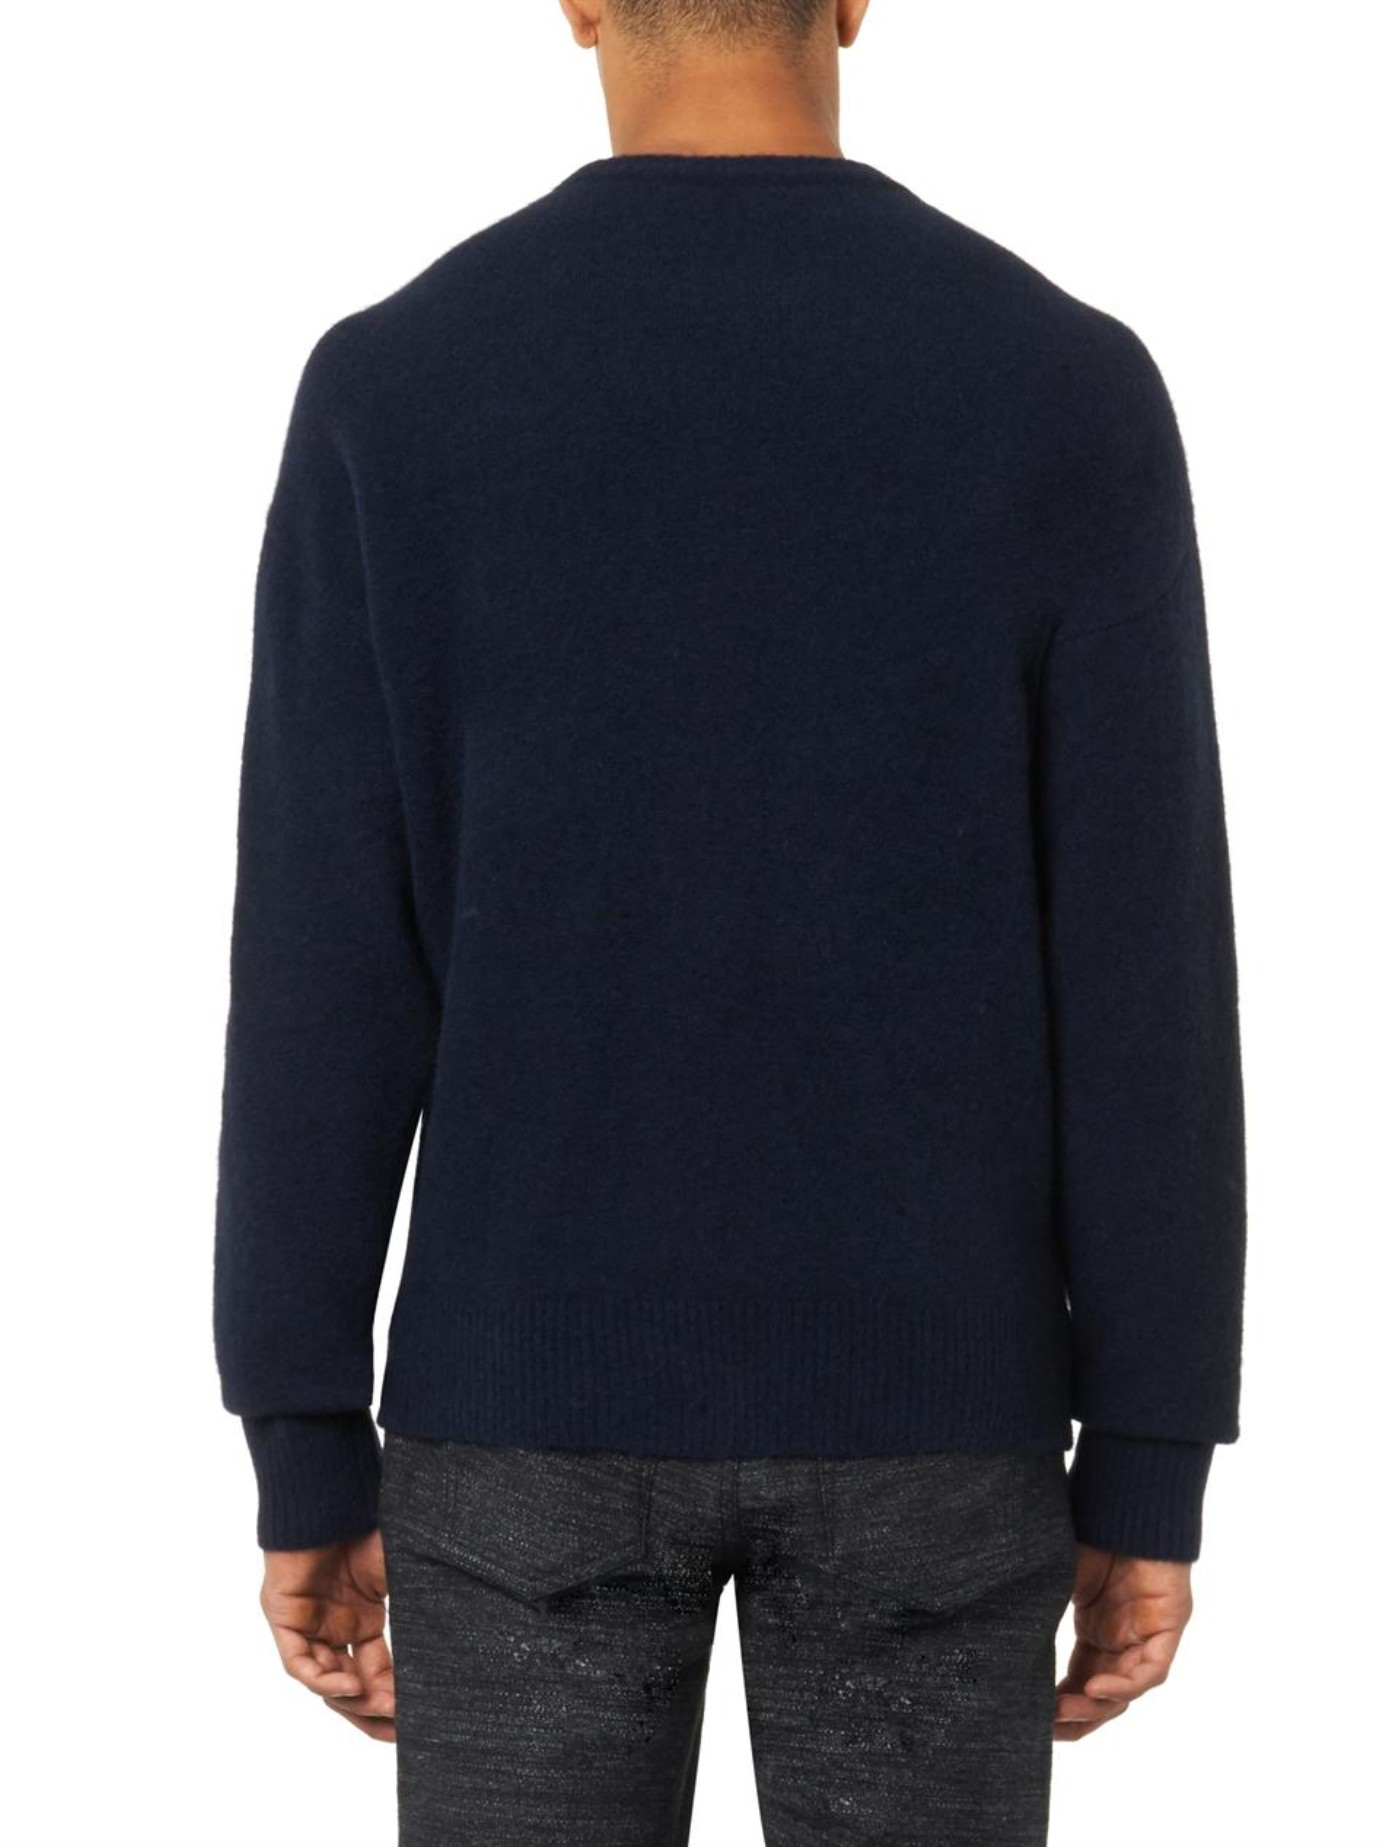 Lyst - Balenciaga Oversized Navy Wool-Blend Sweater in Black for Men